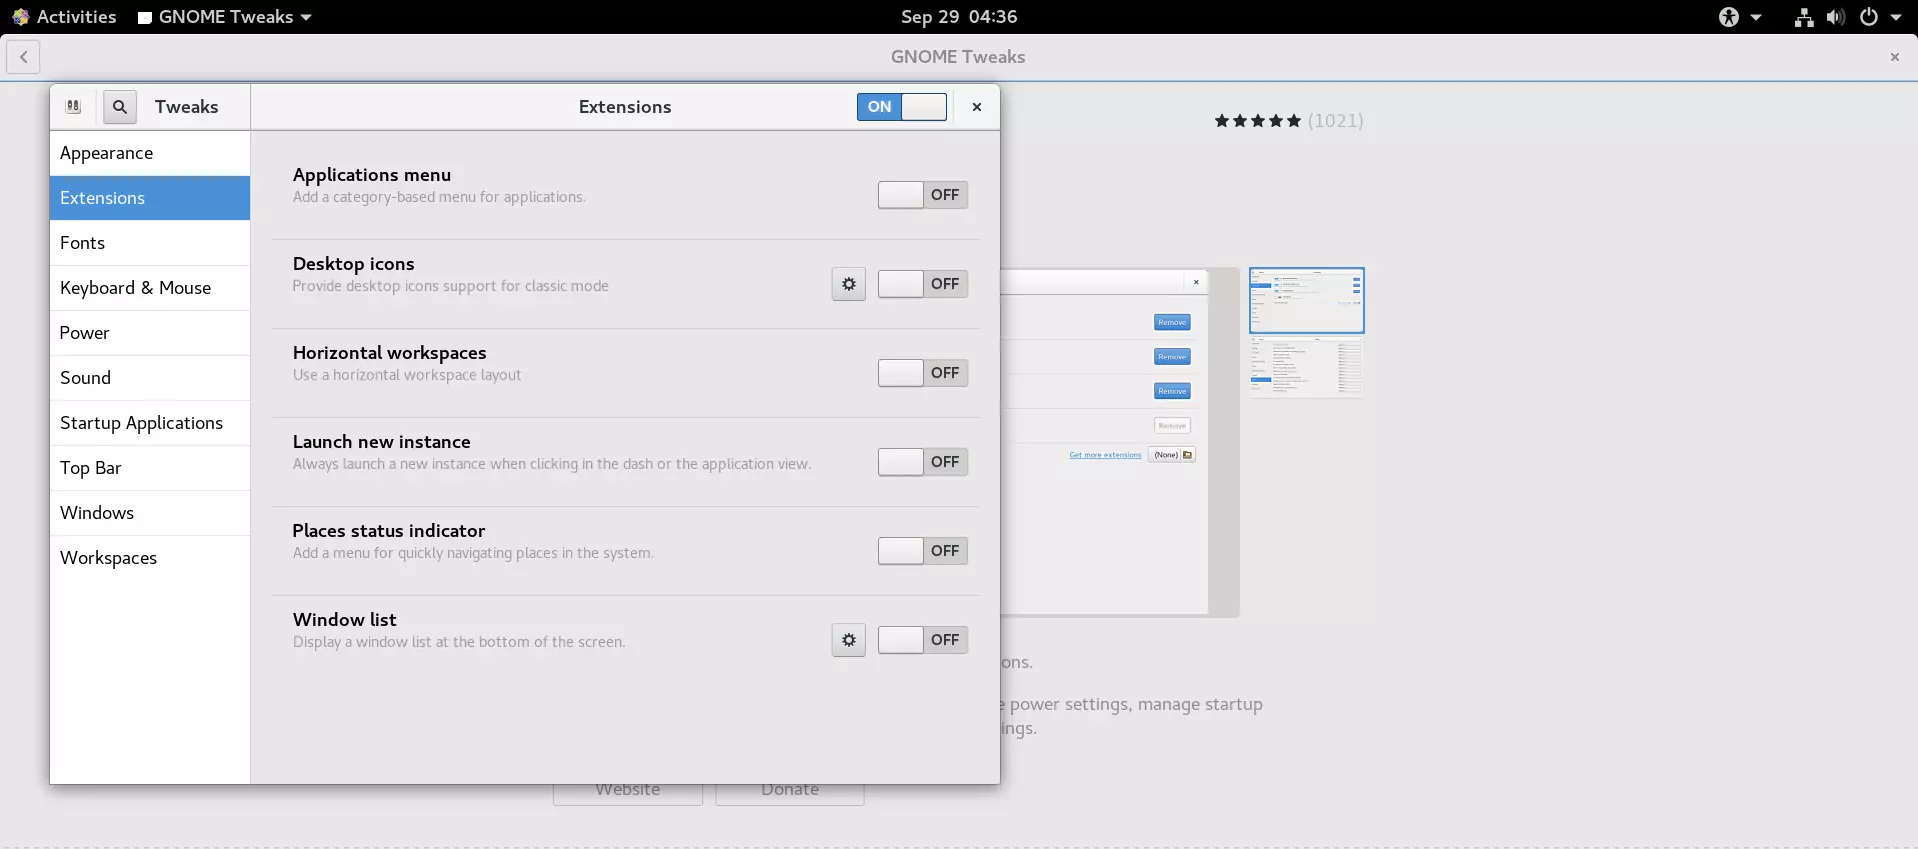 CentOS 8 64-bit Workstation GNOME Extensions